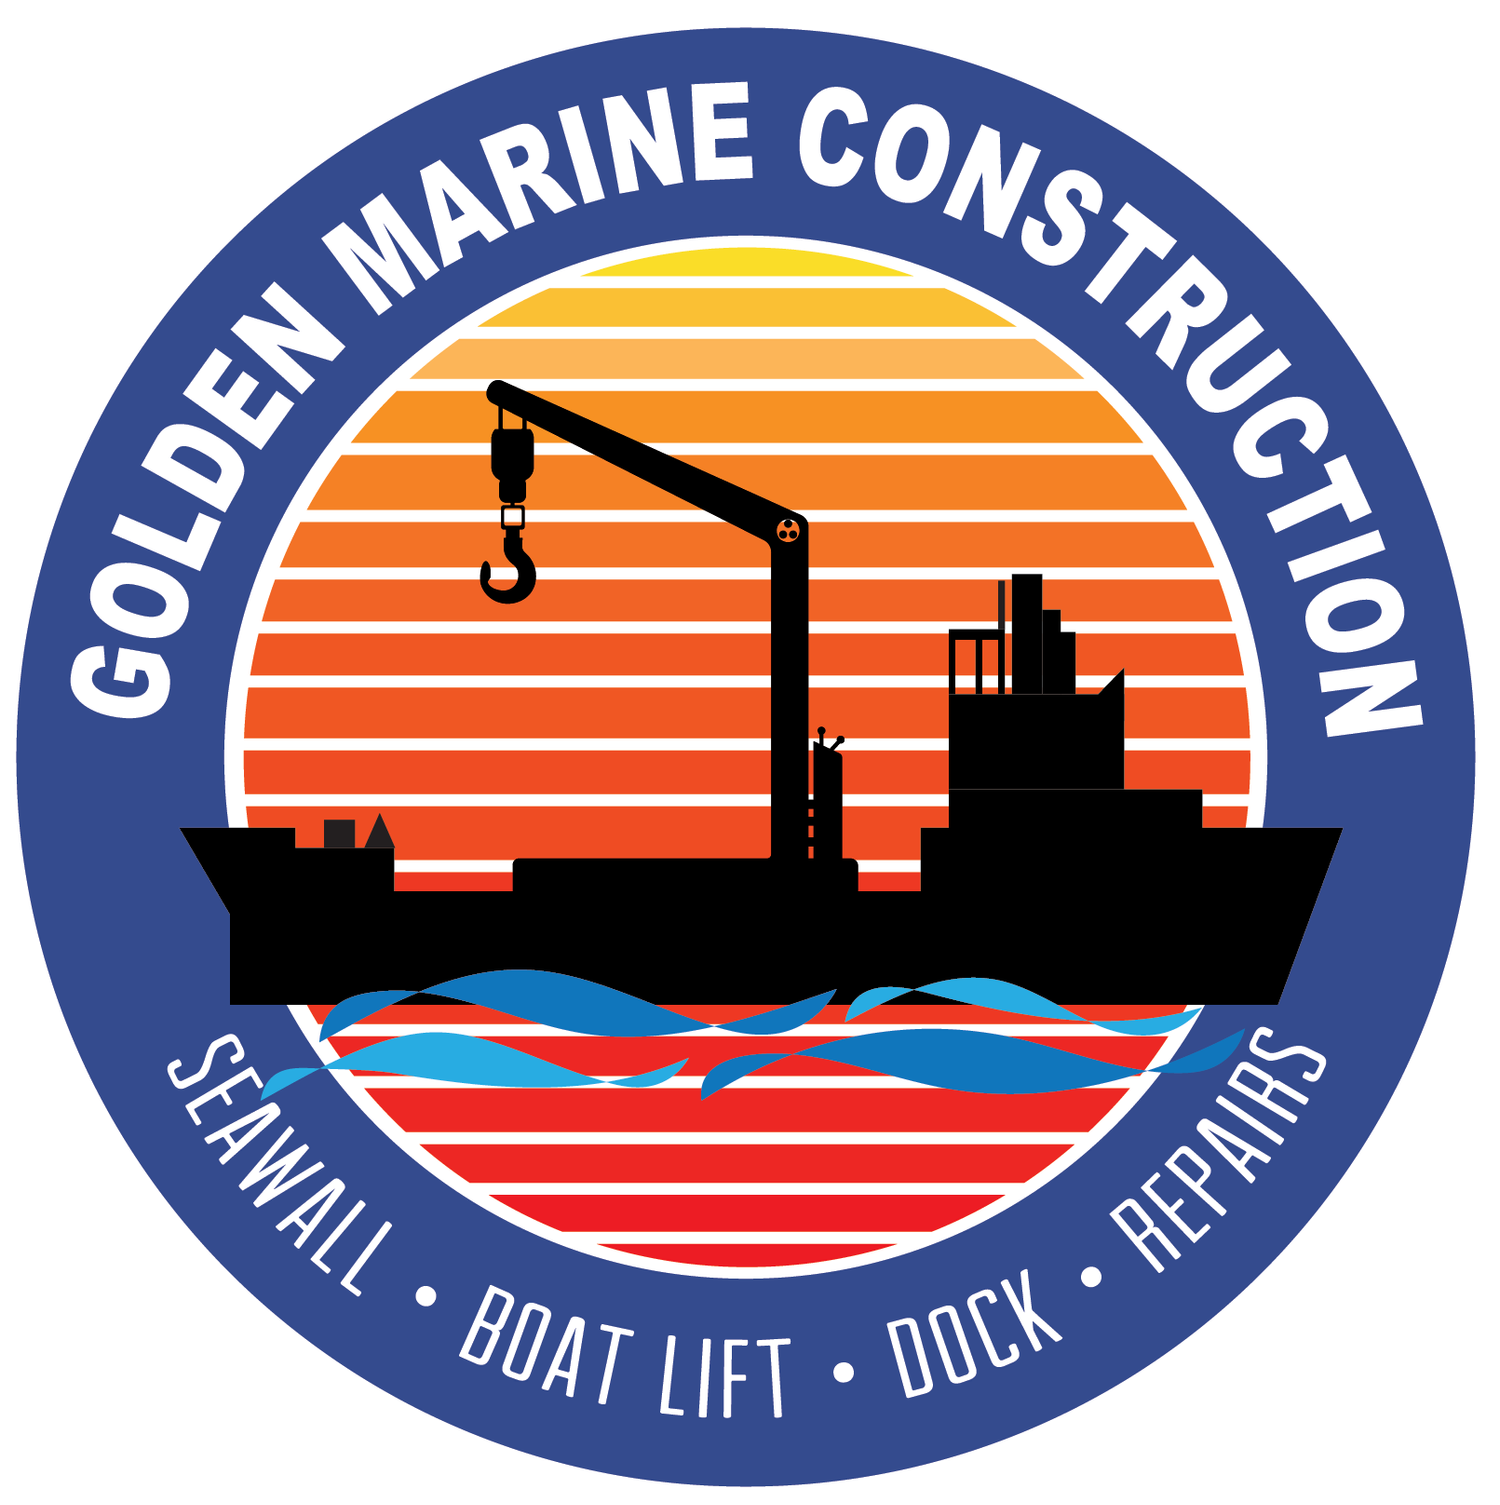 Golden Marine Construction